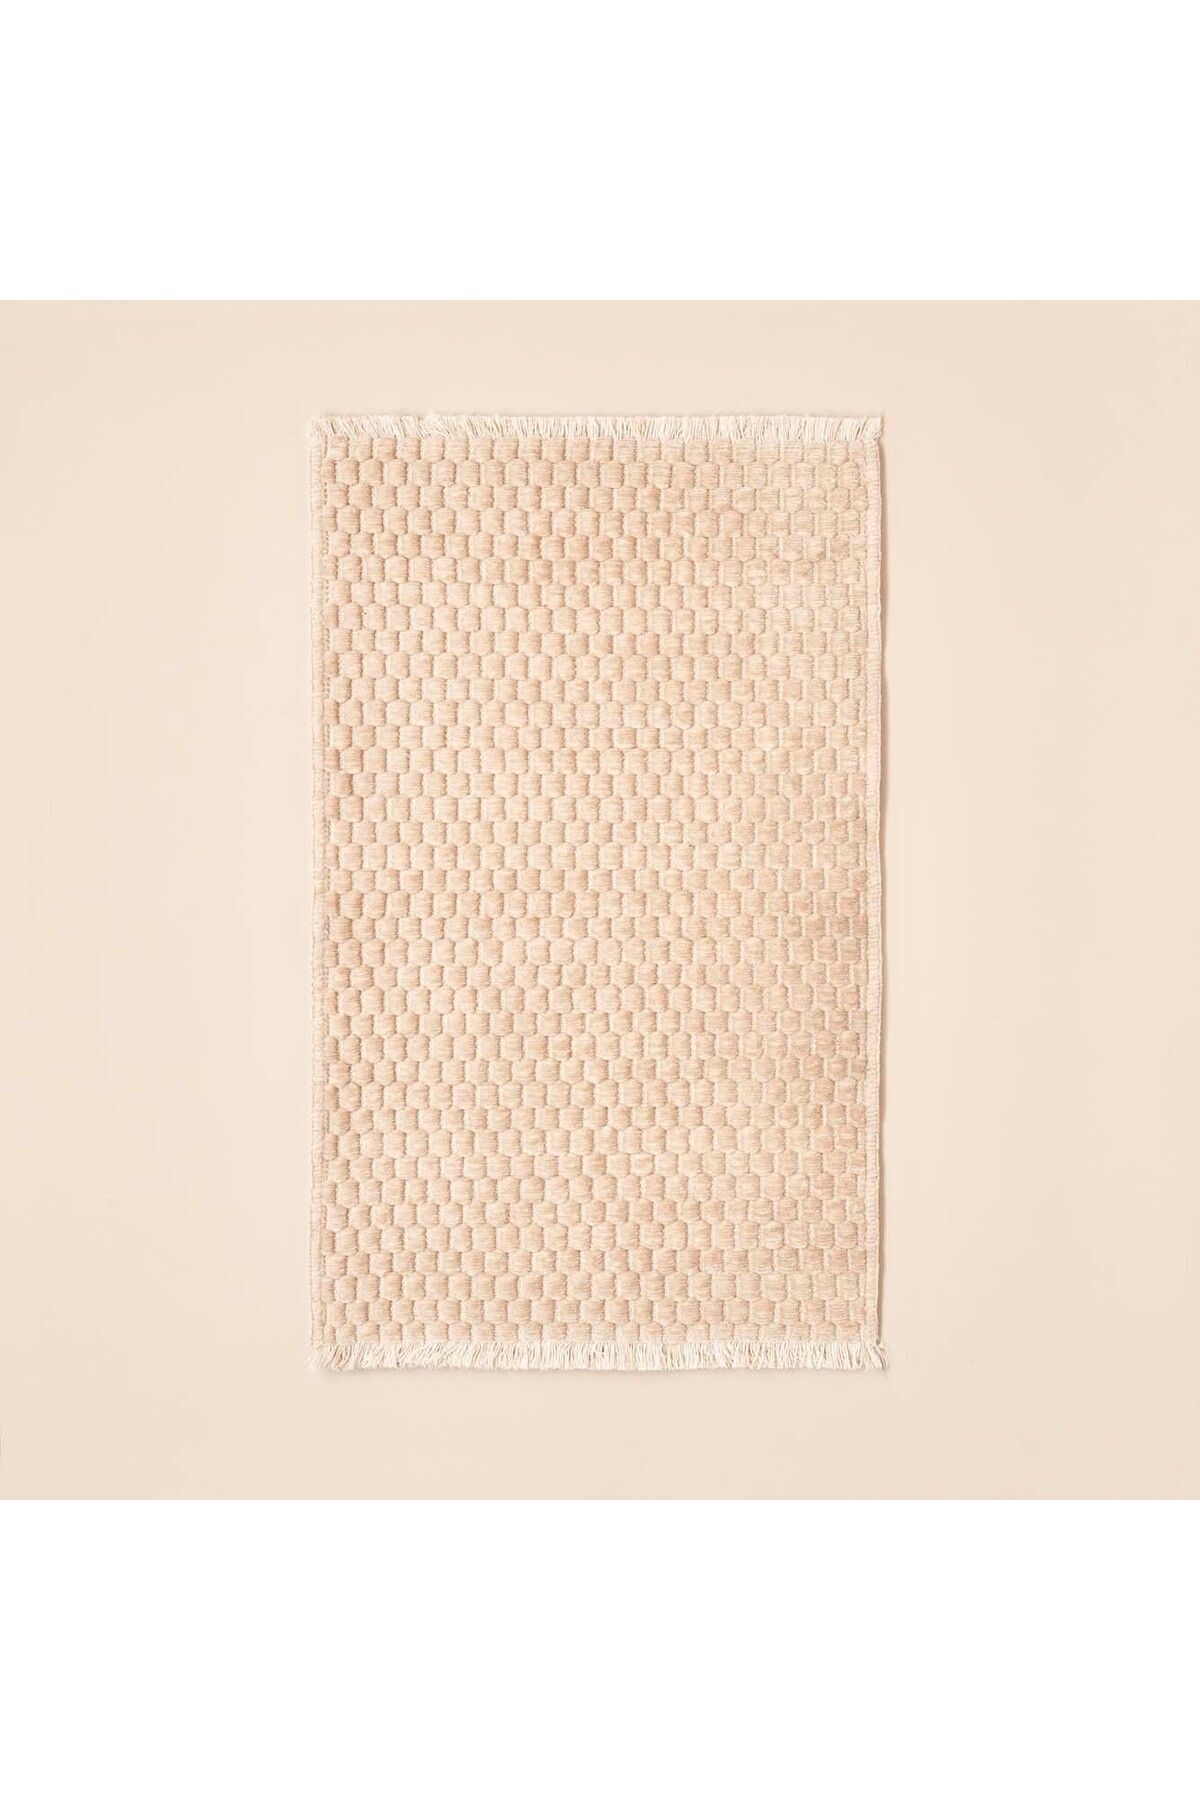 Bella Maison Honeycomb Kilim Bej (80x150 cm) 2002KILM0118